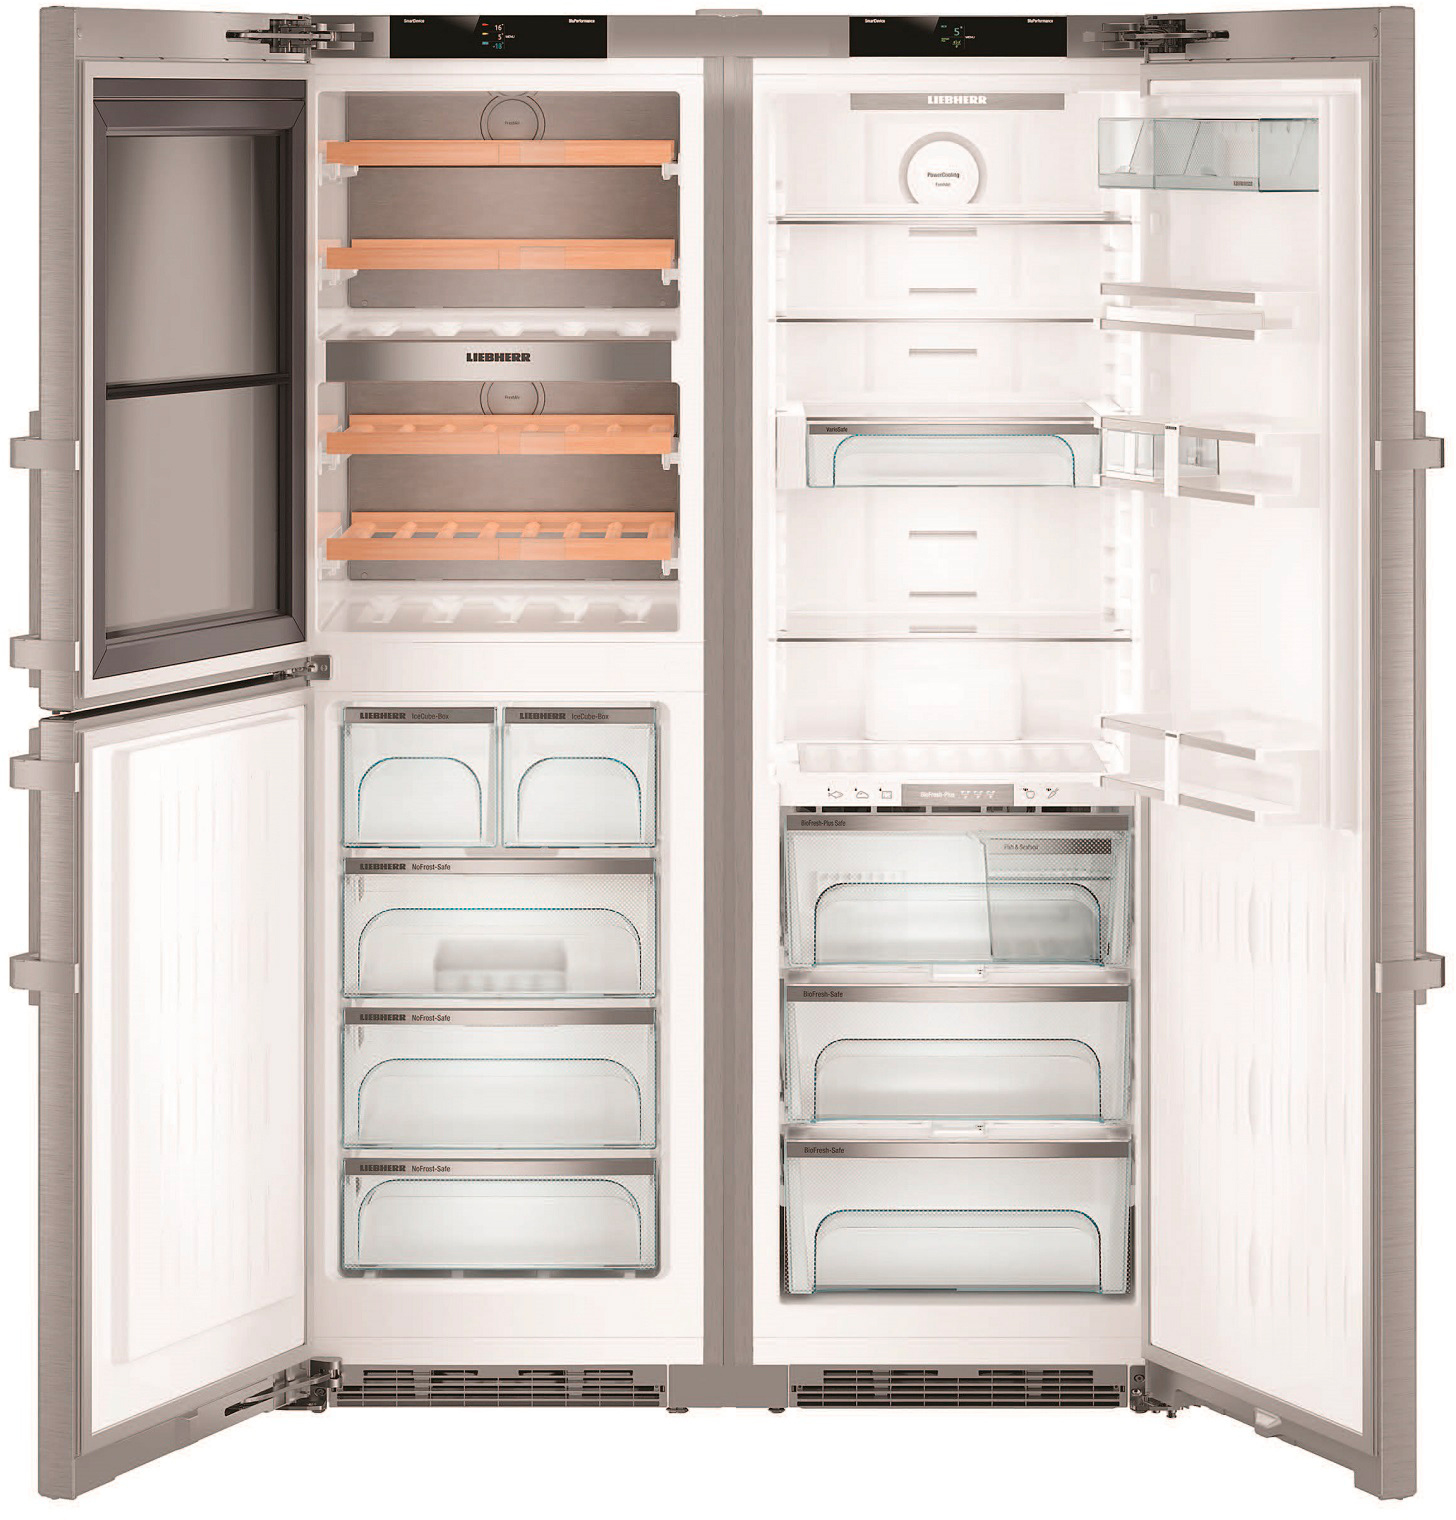 Холодильник Liebherr SBSes 8496 цена 245799 грн - фотография 2